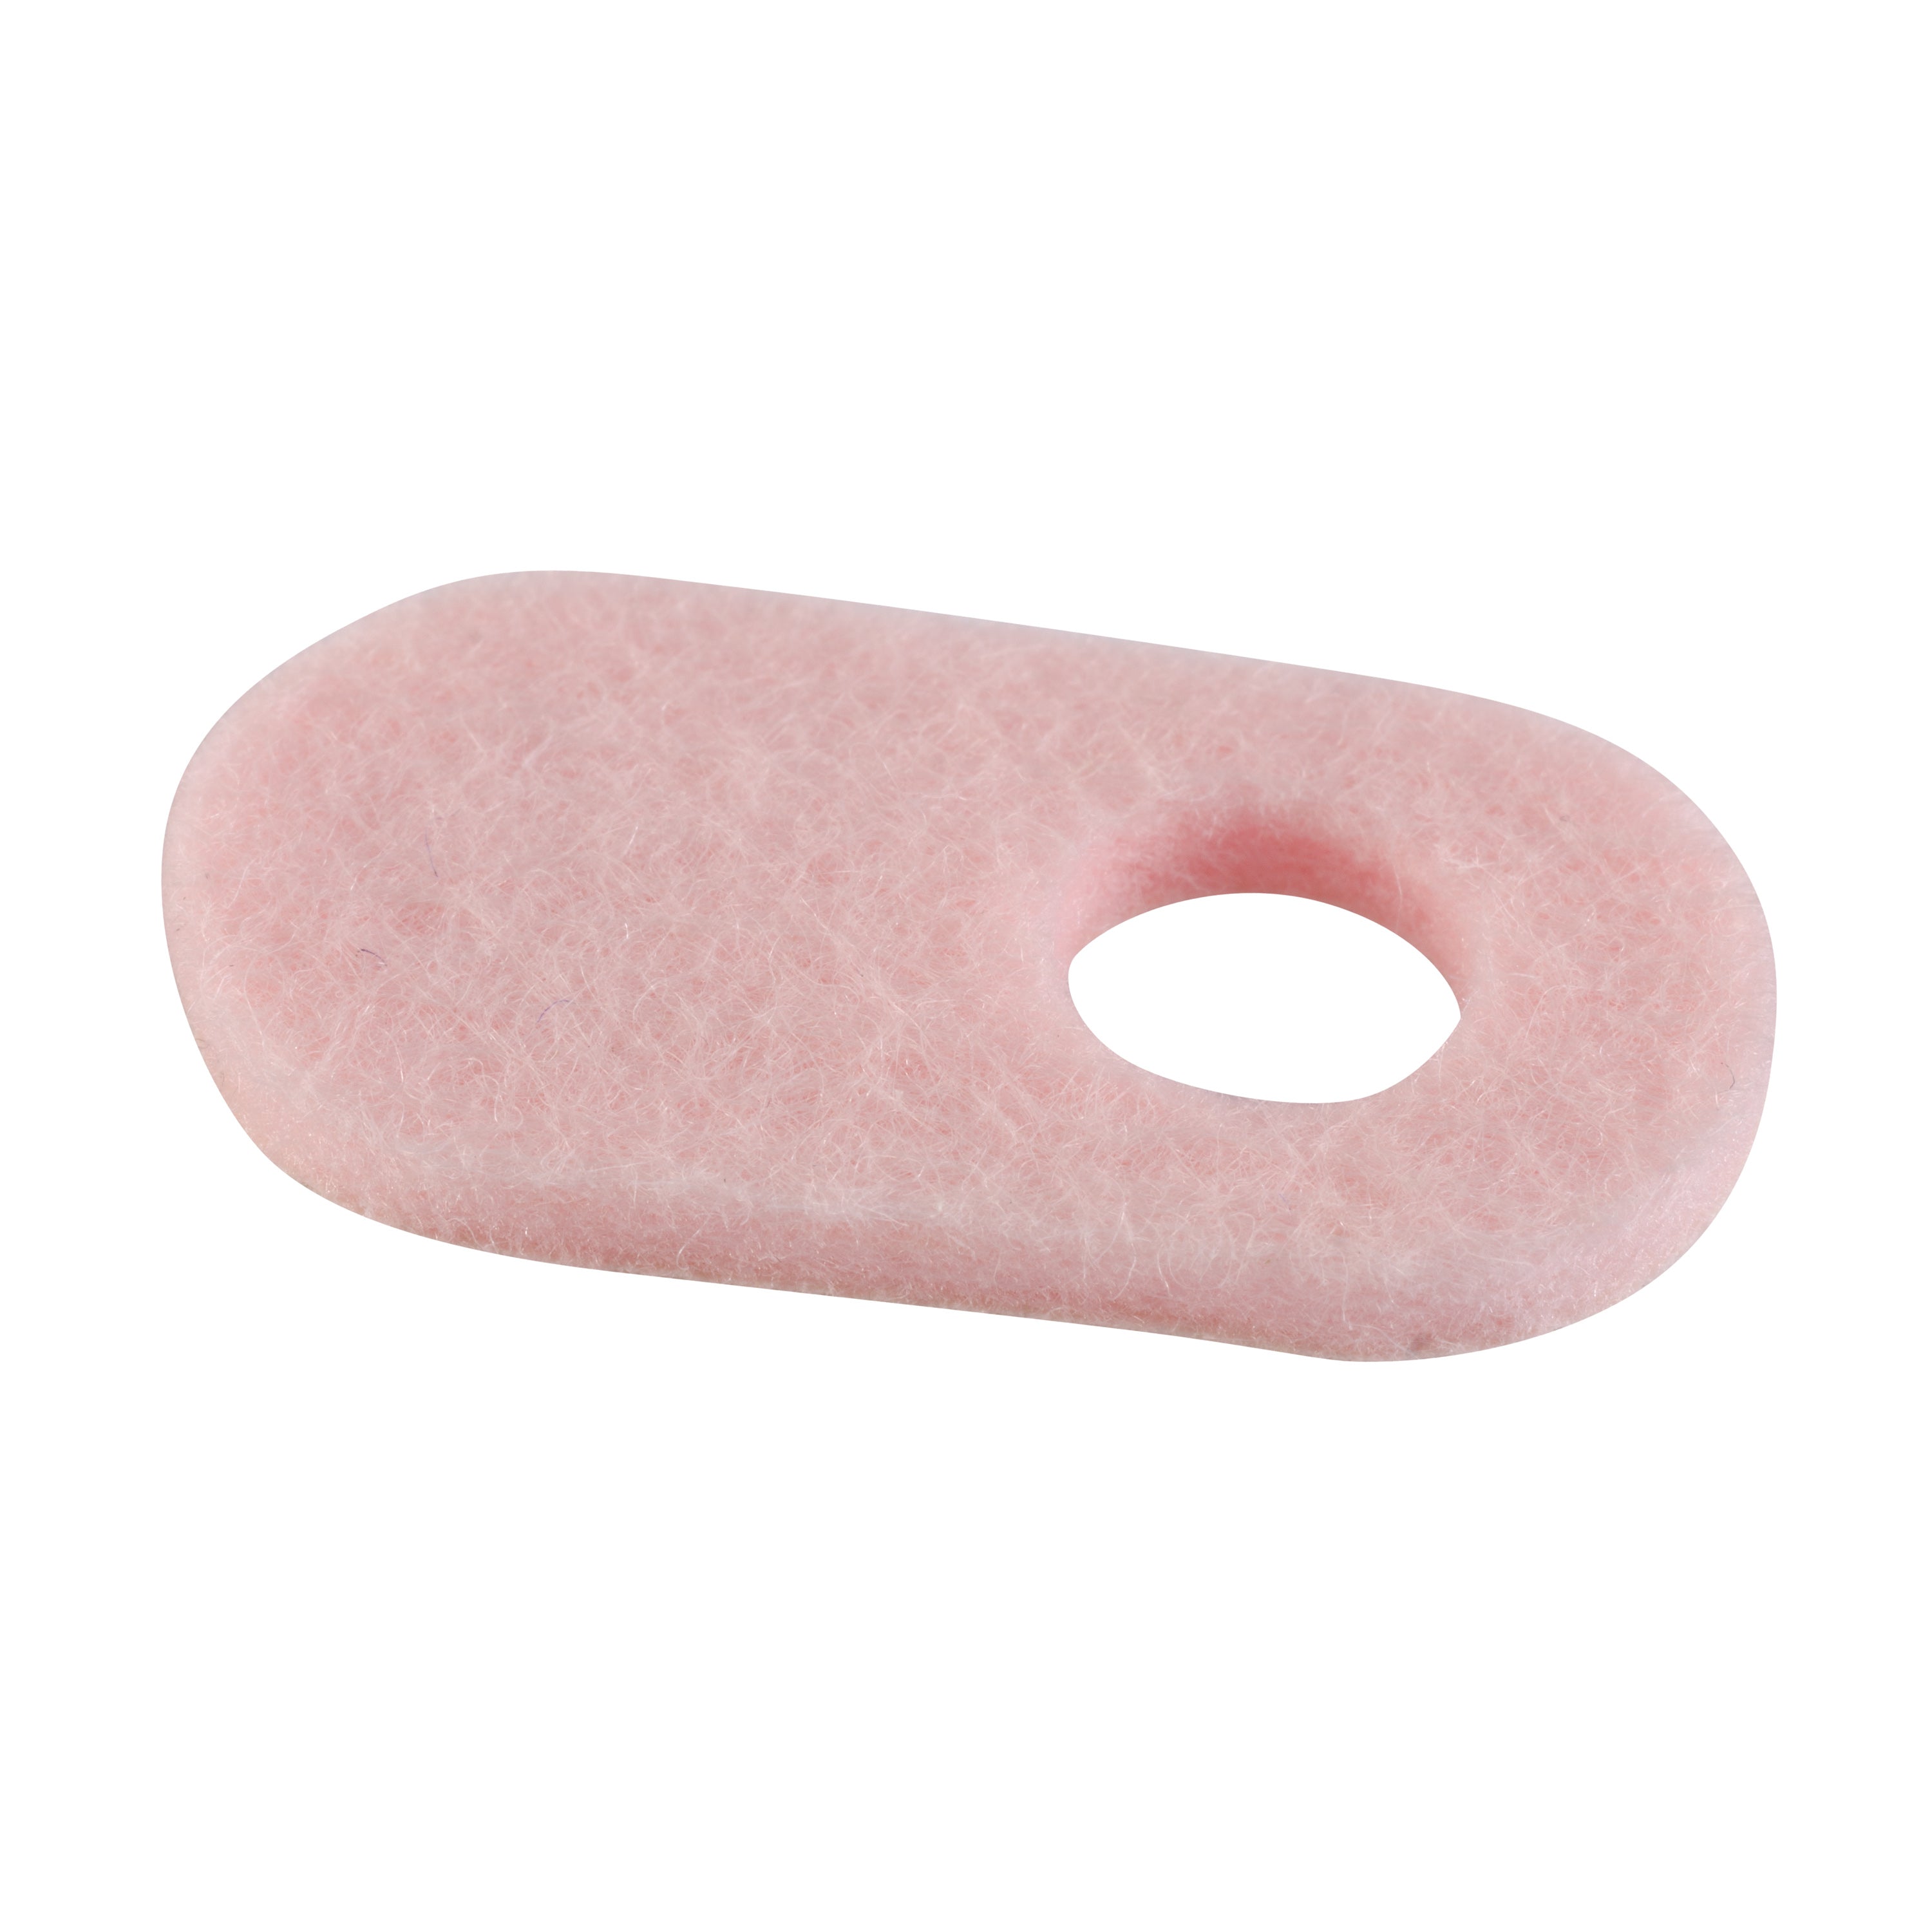 Stein's 1/8" Pink Adhesive Felt C-1 Corn Pad, 500/pk AM-765-1040-0000